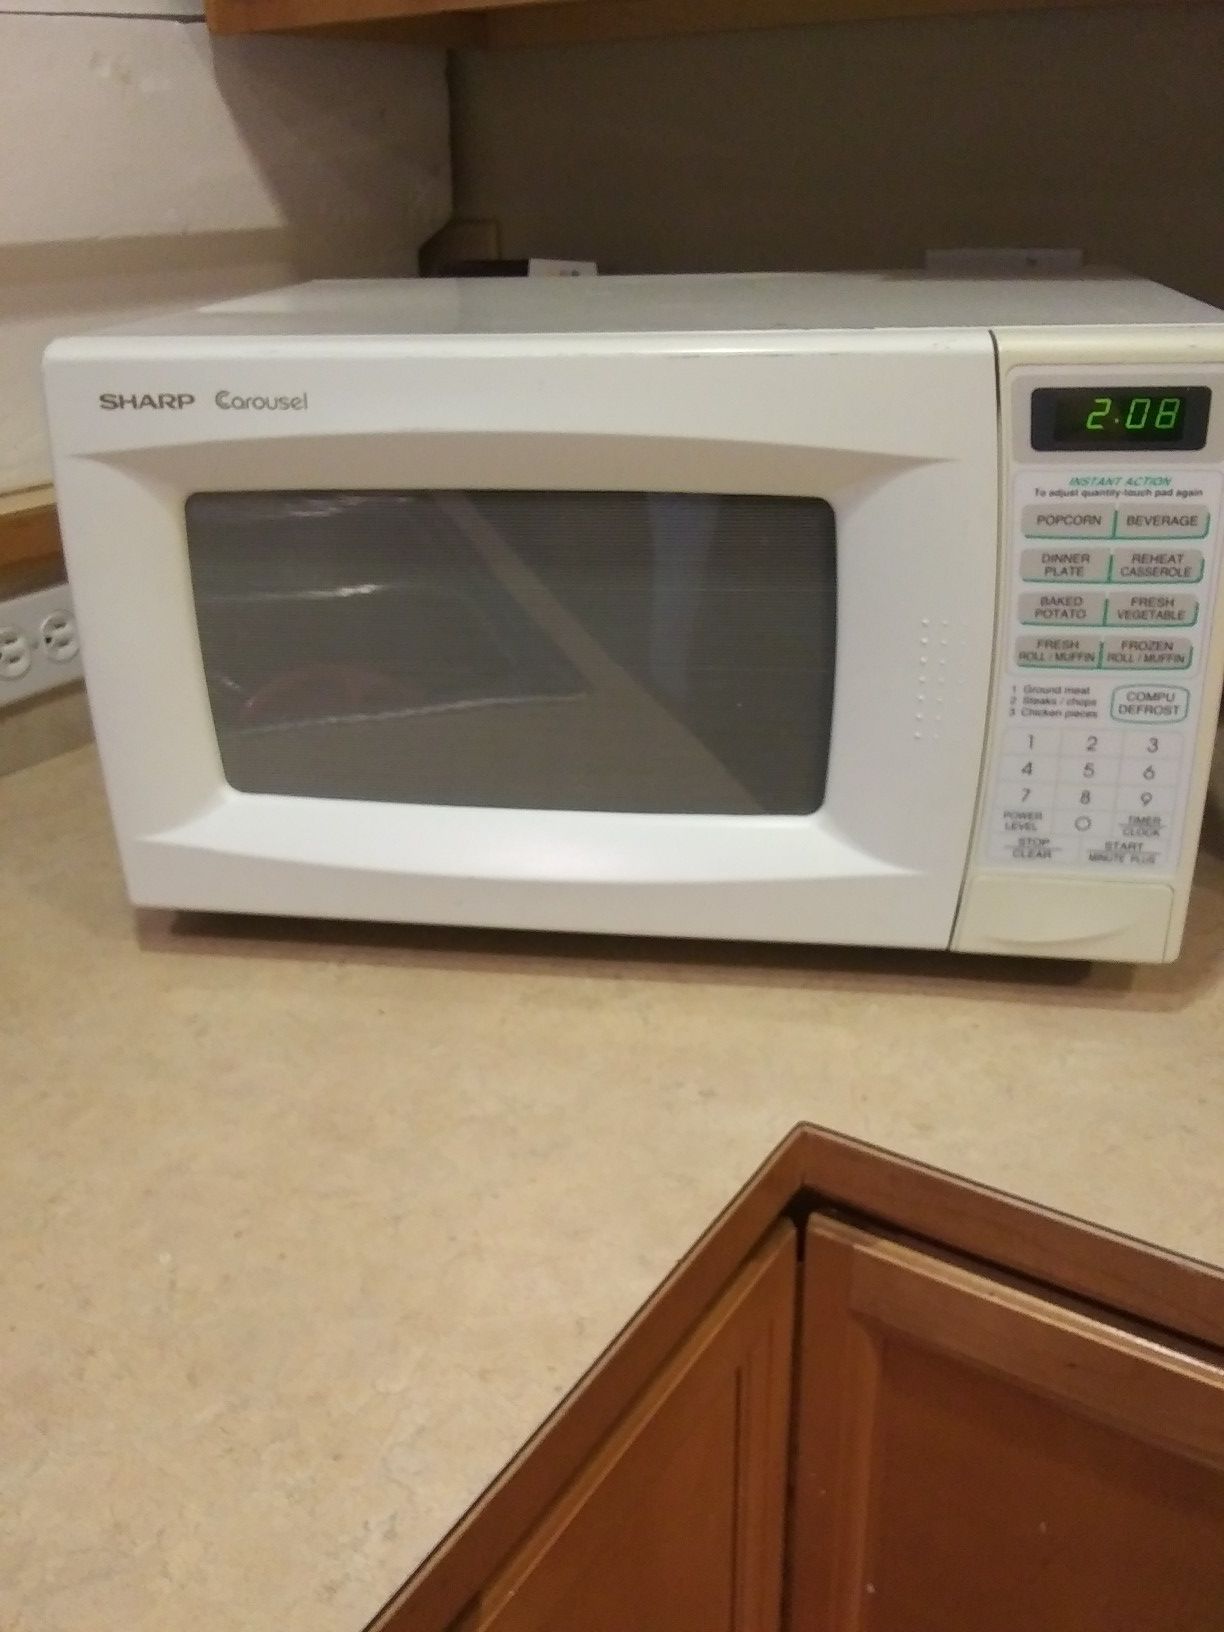 Sharp carousel digital microwave oven